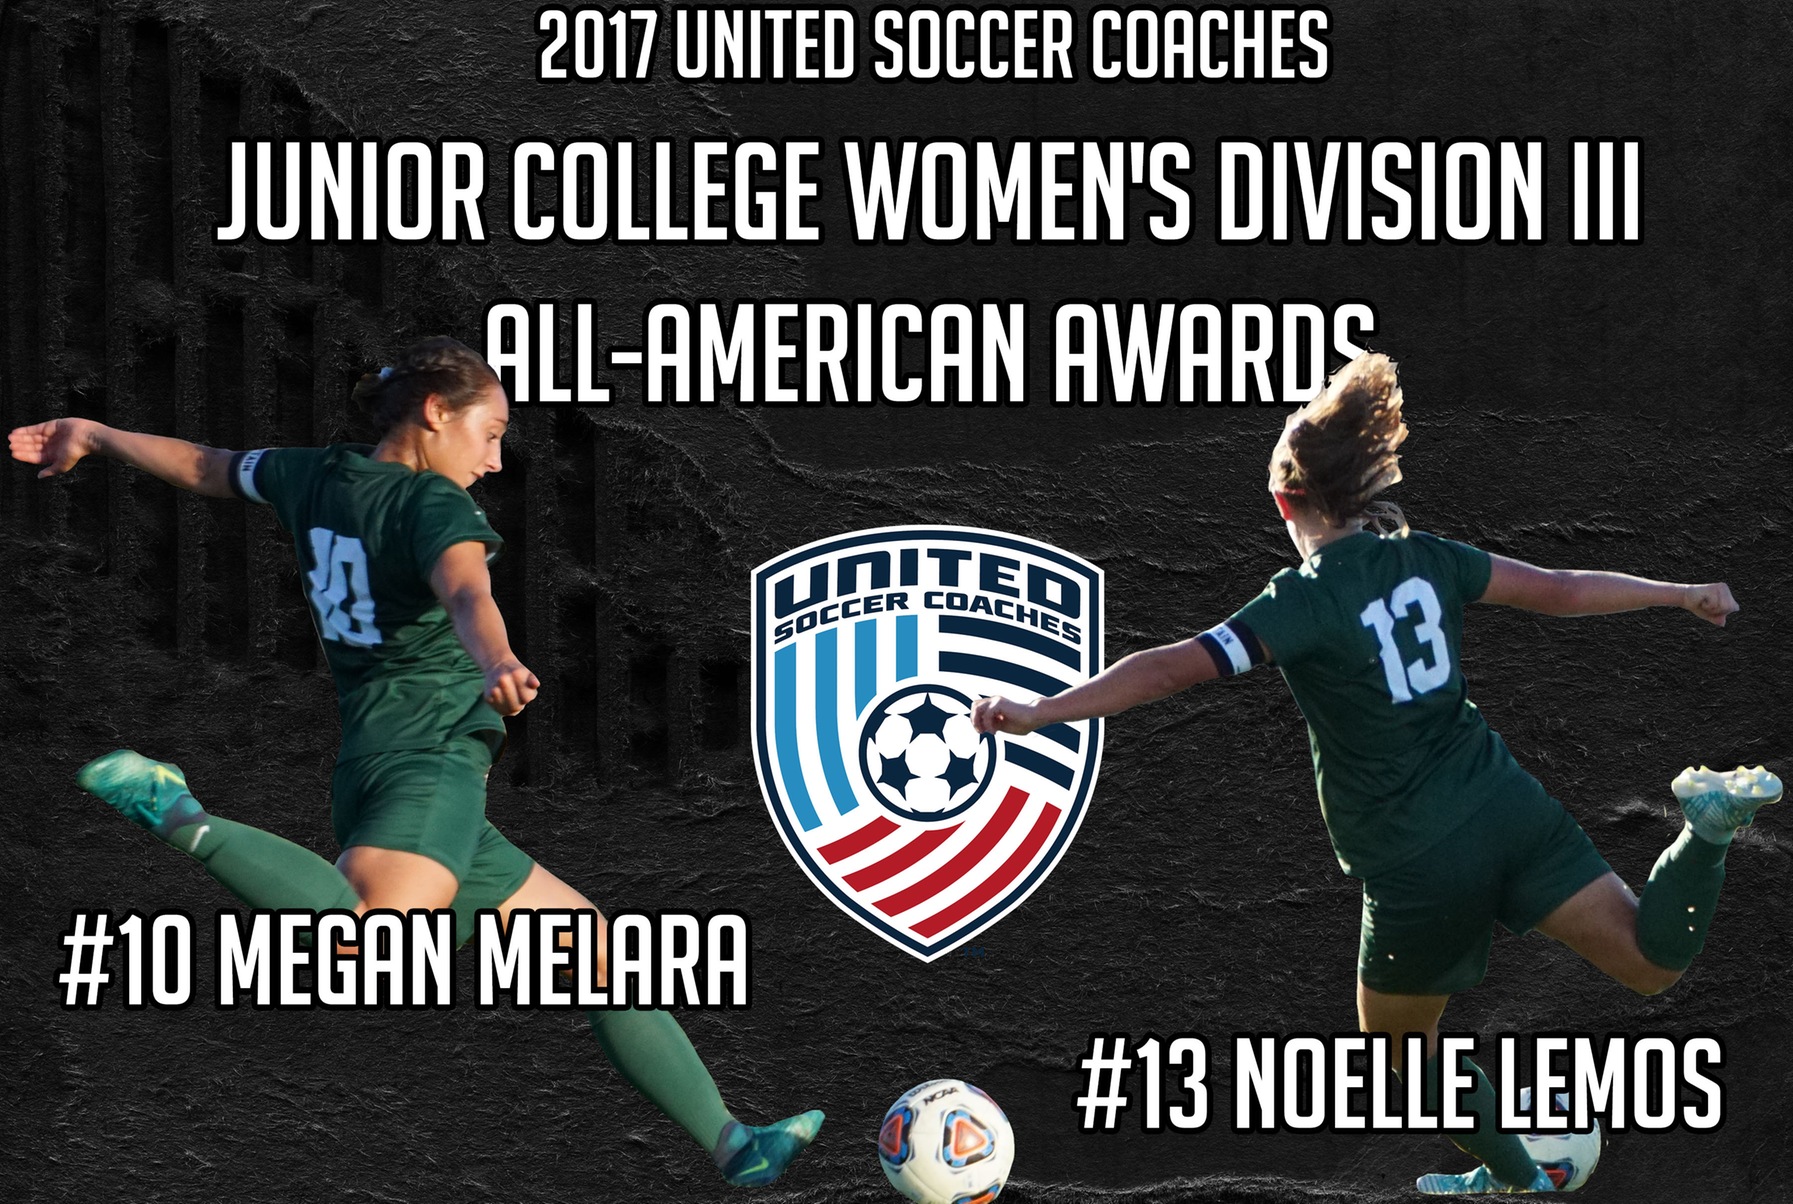 Lemos & Melara Named to United Soccer Coaches Junior College Women's Division III All-American Teams